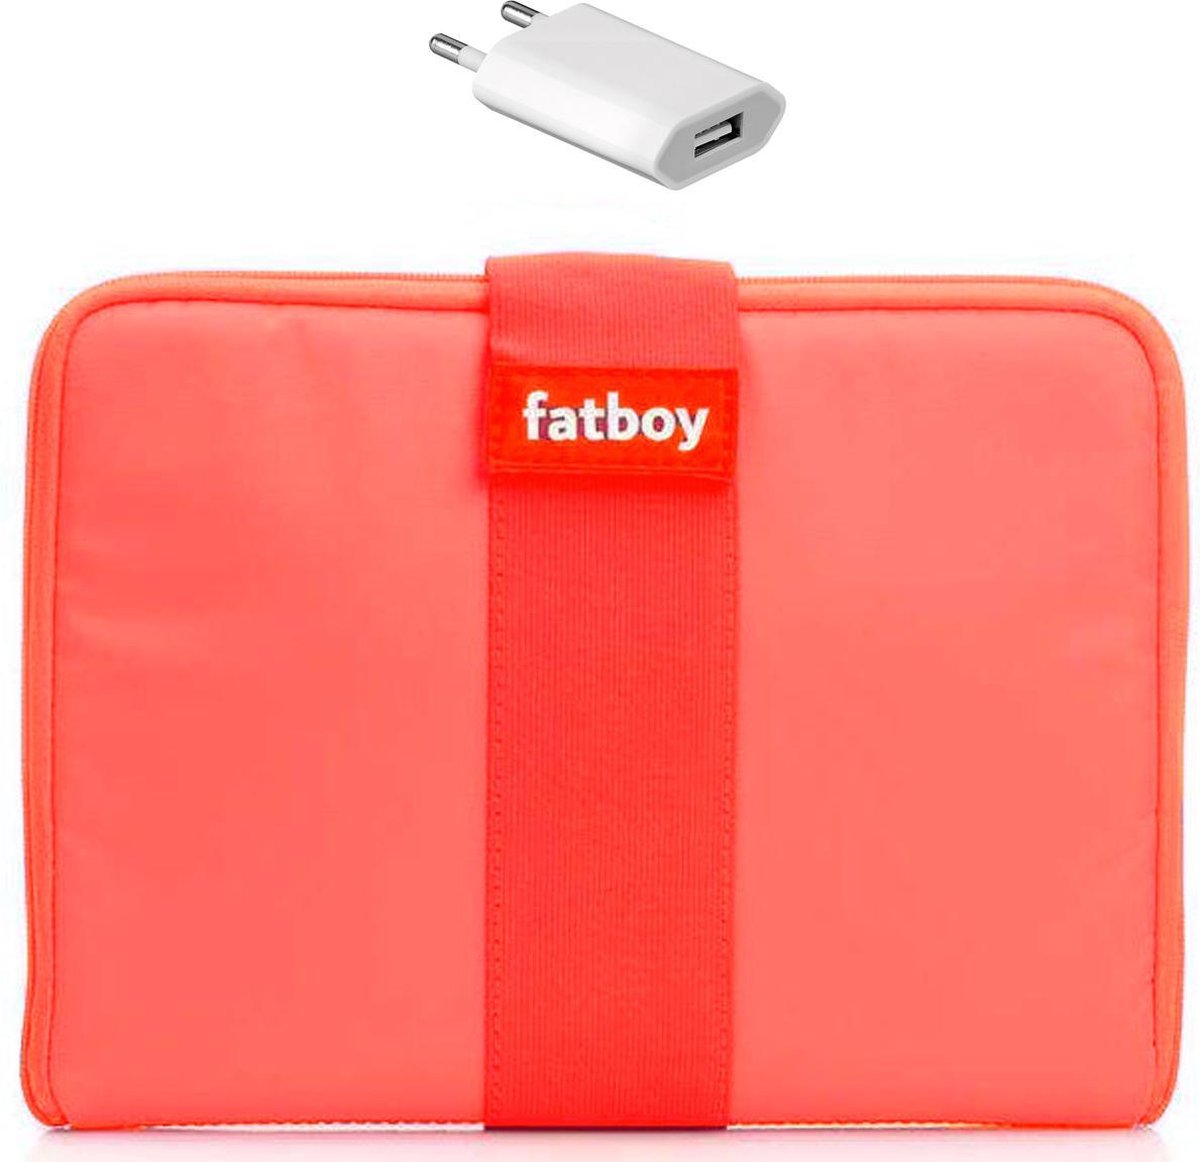 Fatboy – tablet hoes – Fatboy tuxedo zalmroze – inclusief - USB stekker - 28,5 cm x 22 cm – hoes tablet